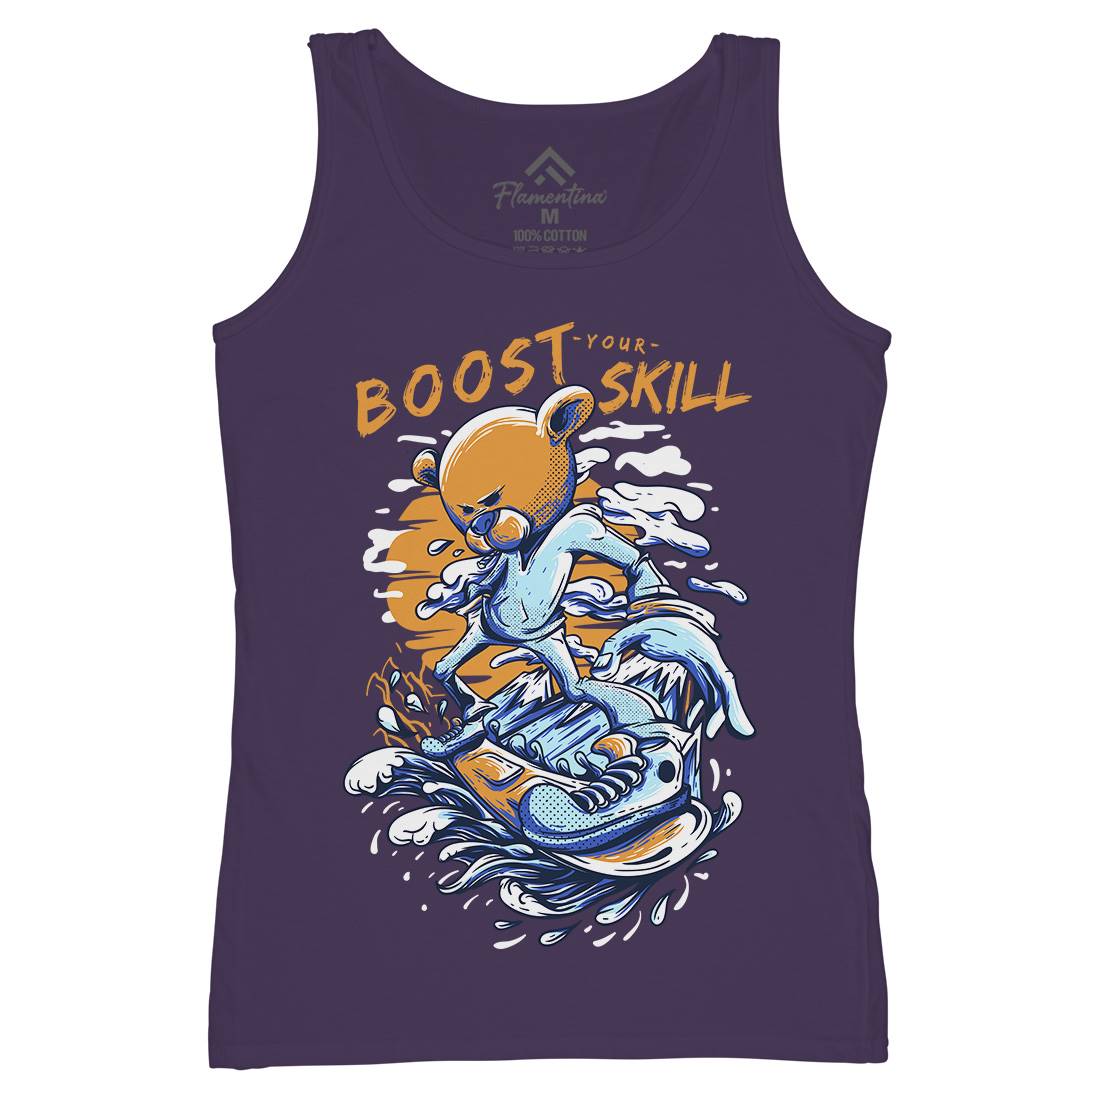 Boost Your Skill Womens Organic Tank Top Vest Surf D716